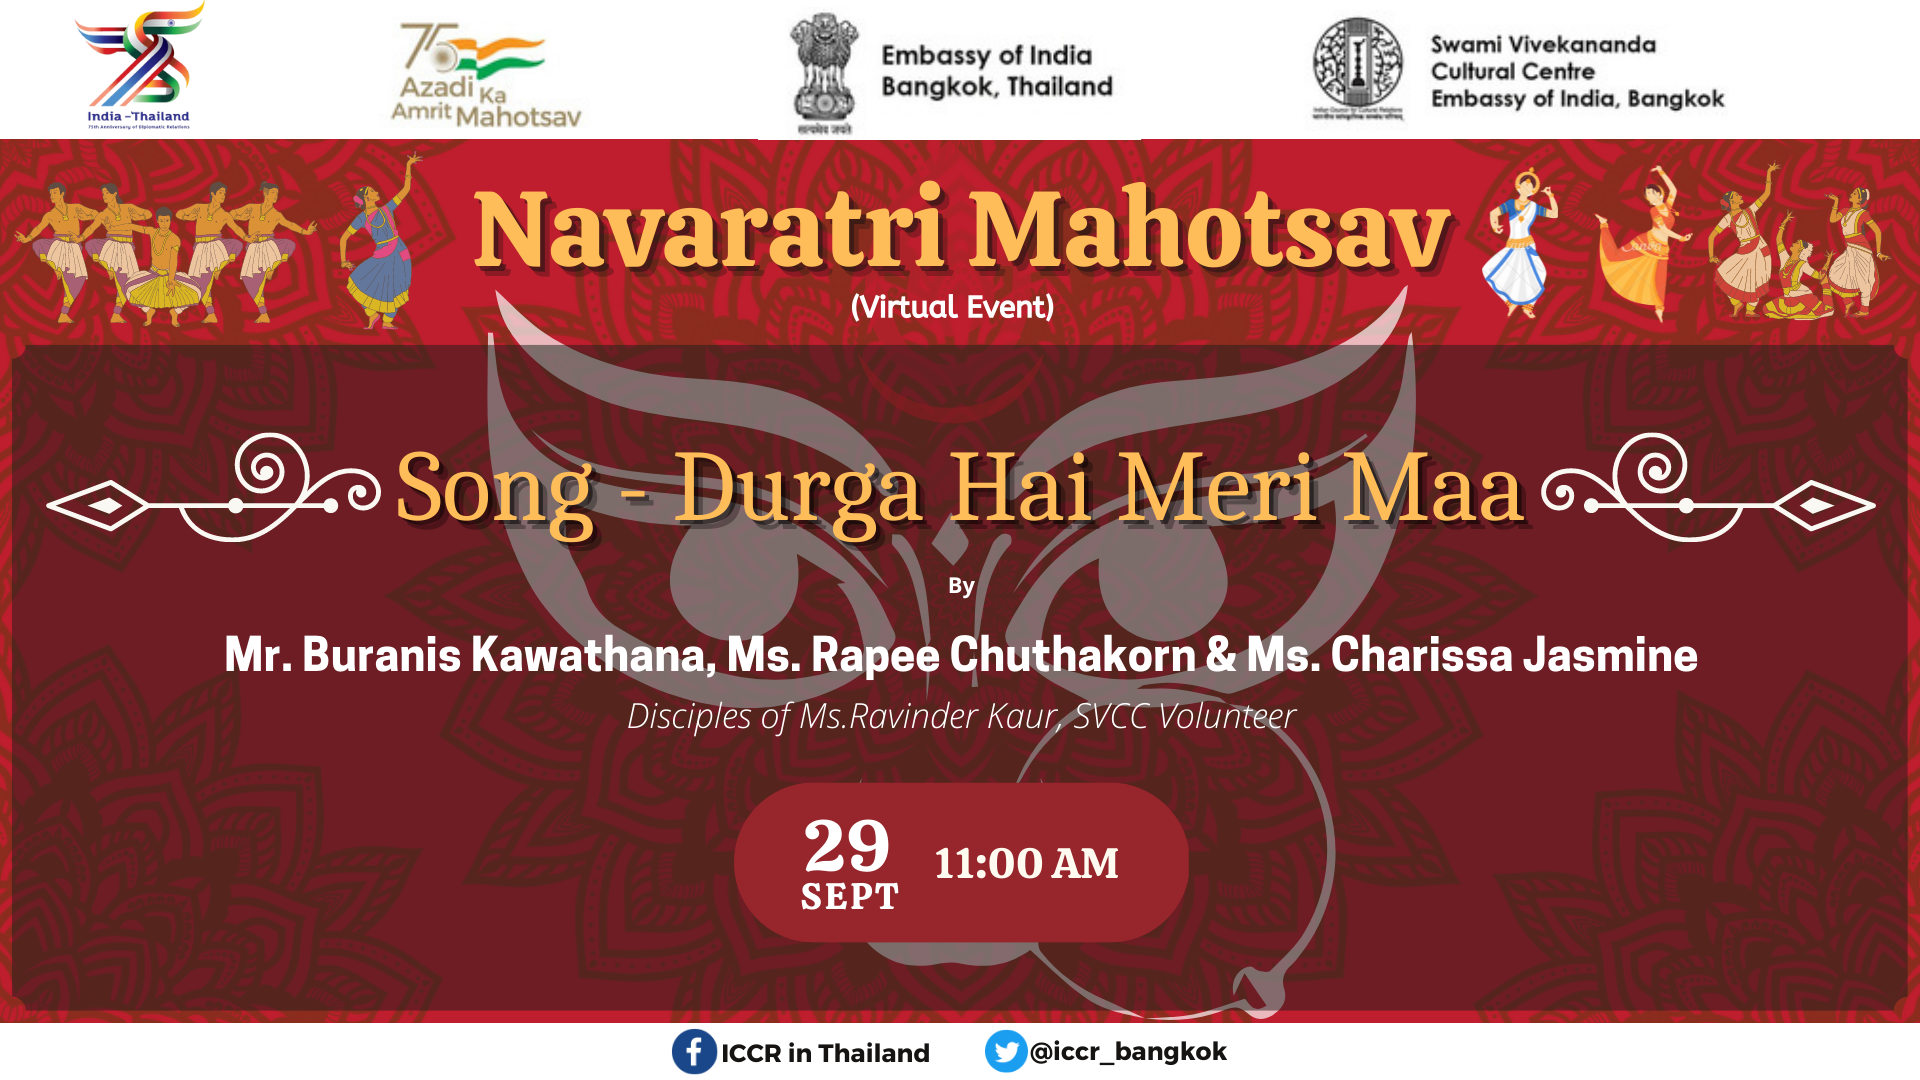 SVCC's evet - Navratri Days 4 - Navratri Days 4 - Durga Hain Meri Maa by Mr. Buranis Kawathana, Ms. Rapee Chuthakorn and Ms. Charissa Jasmine, SVCC students and disciples of Ms.Ravinder Kaur